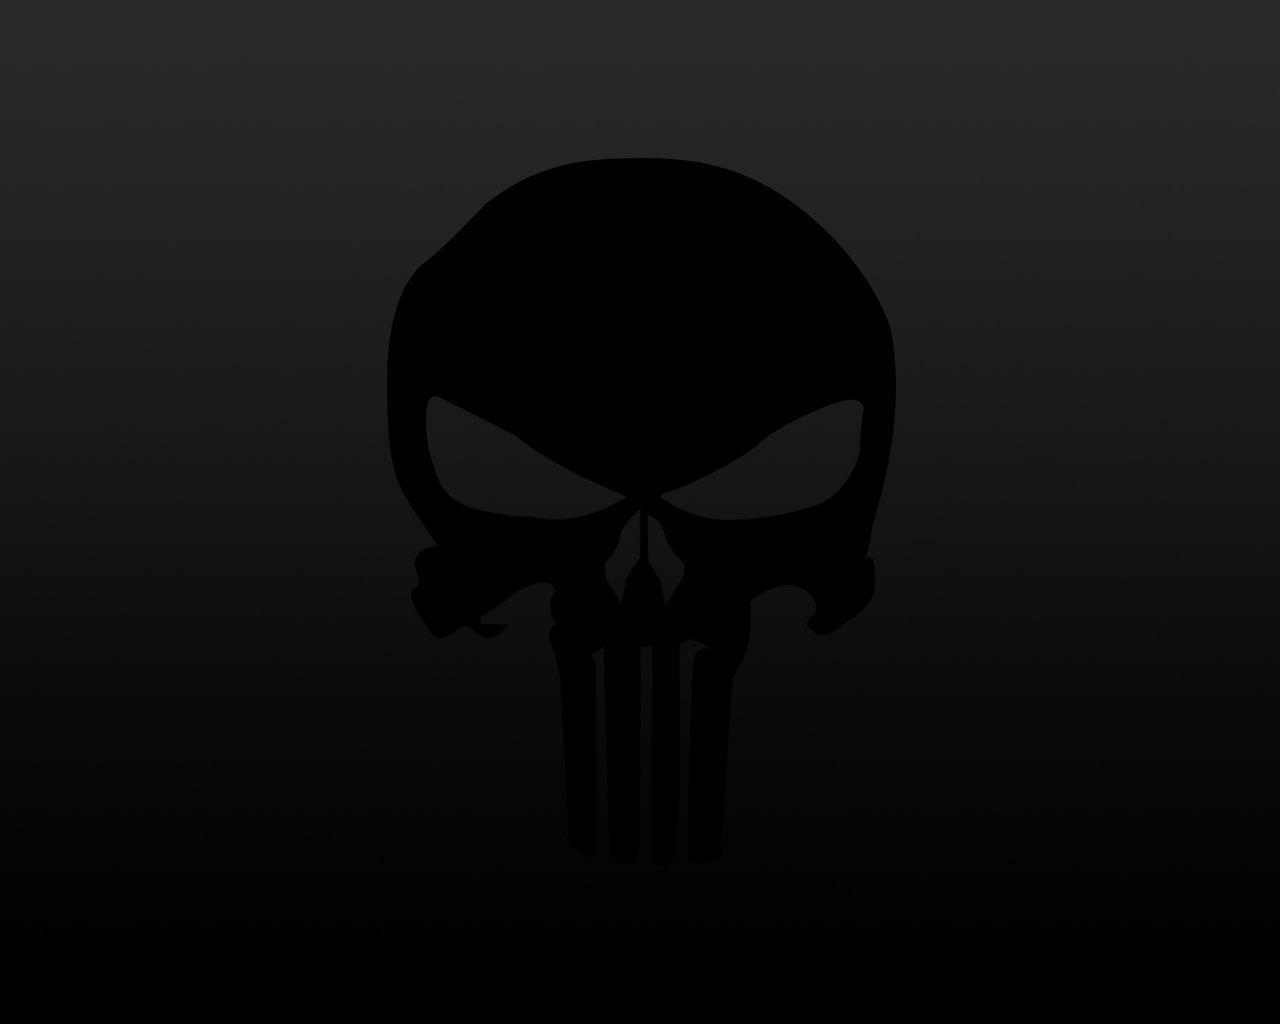 Punisher Background (75 Wallpaper)